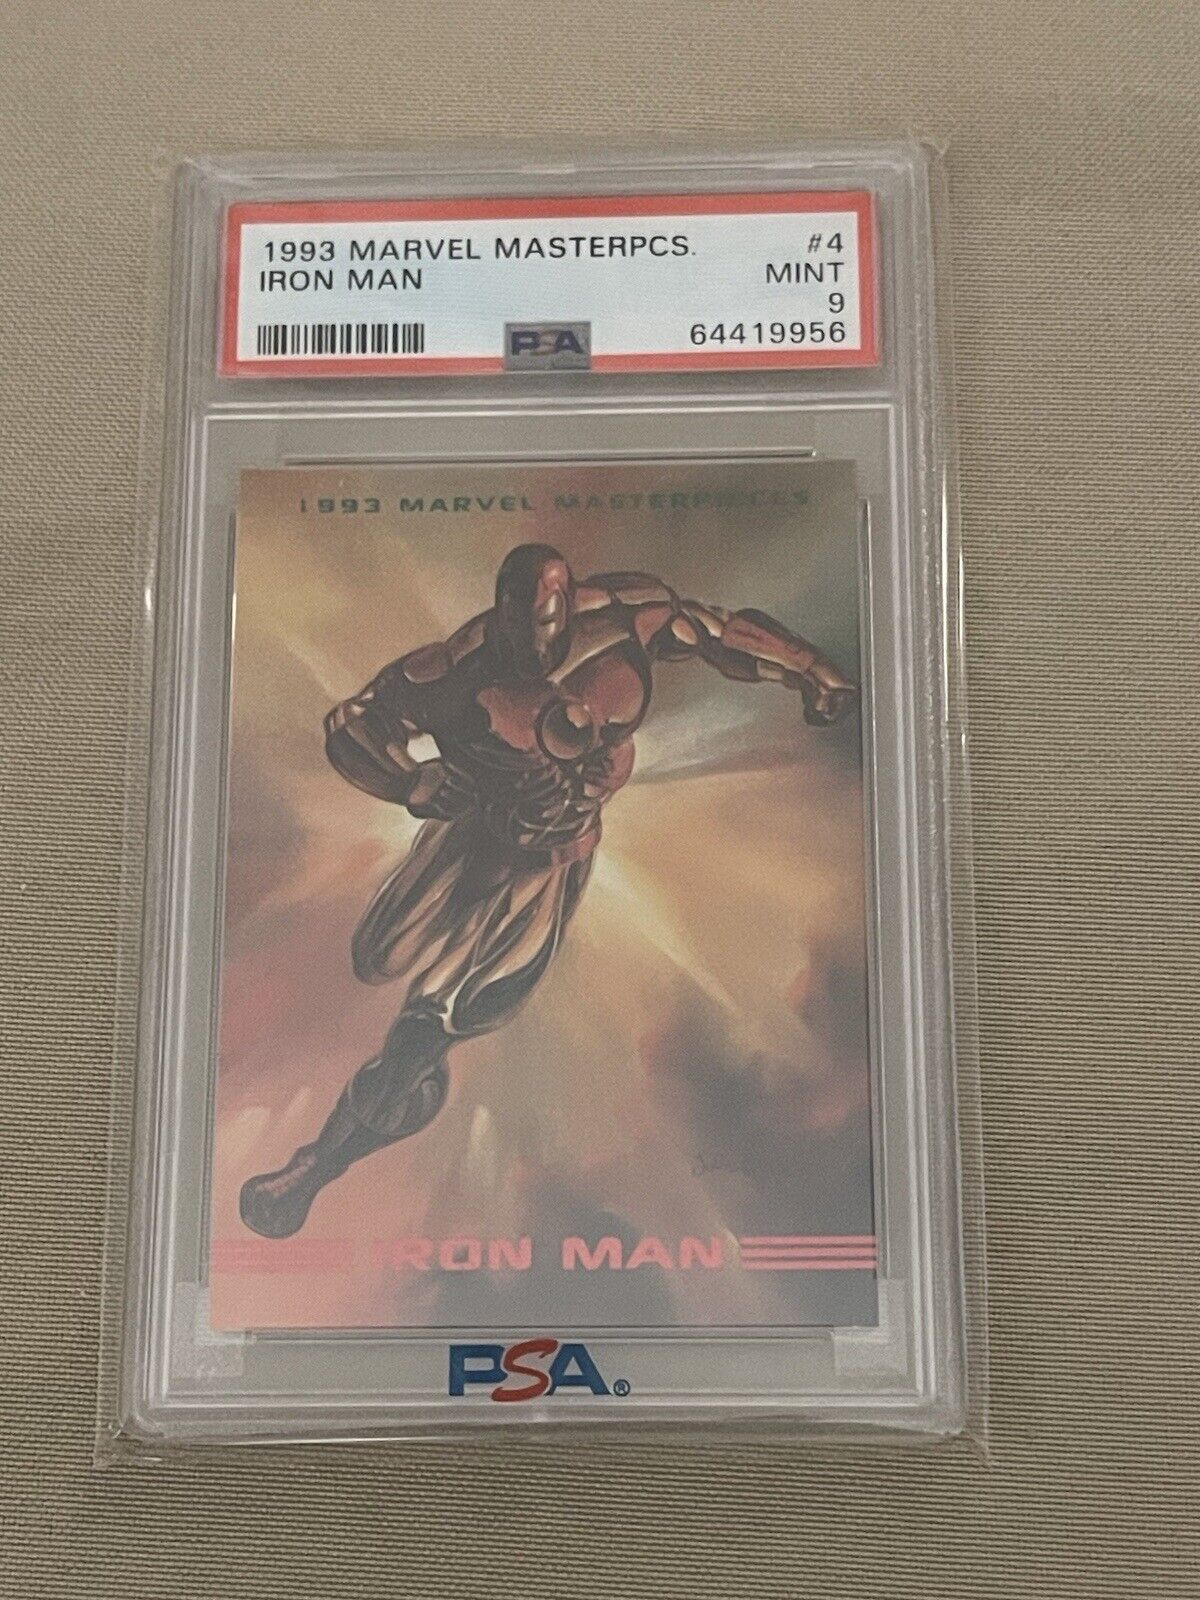 1993 Marvel Masterpieces Iron Man #4 PSA Mint 9